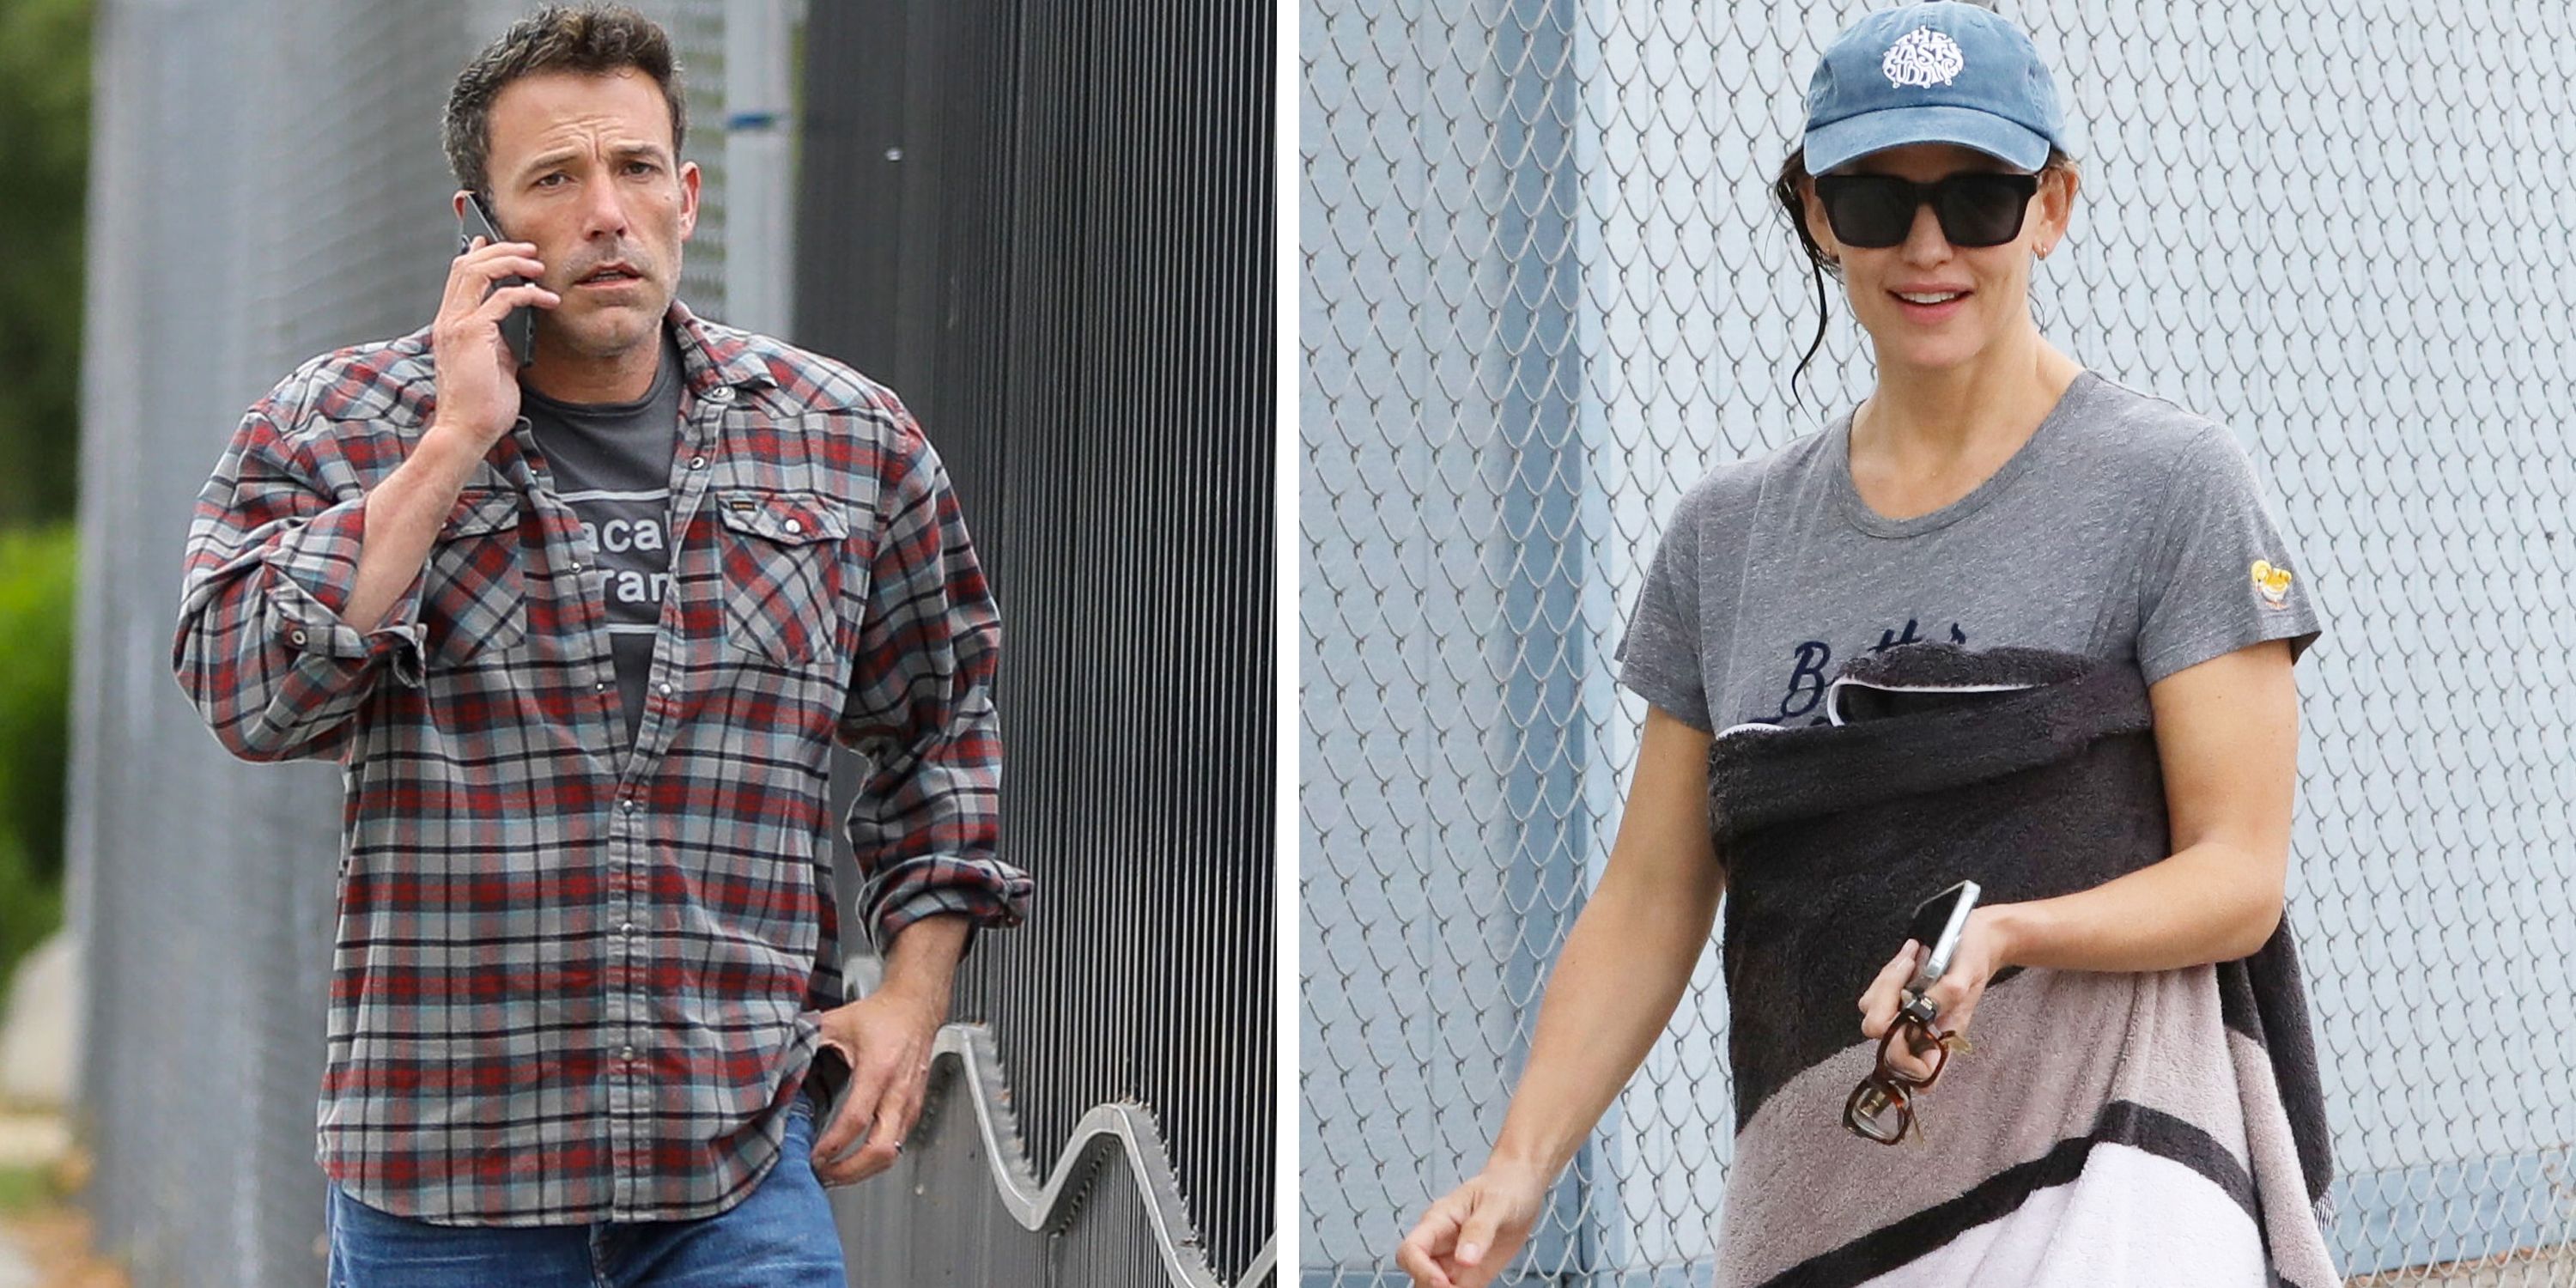 ben Affleck Reunites With Jennifer Garner After Jlo Honeymoon